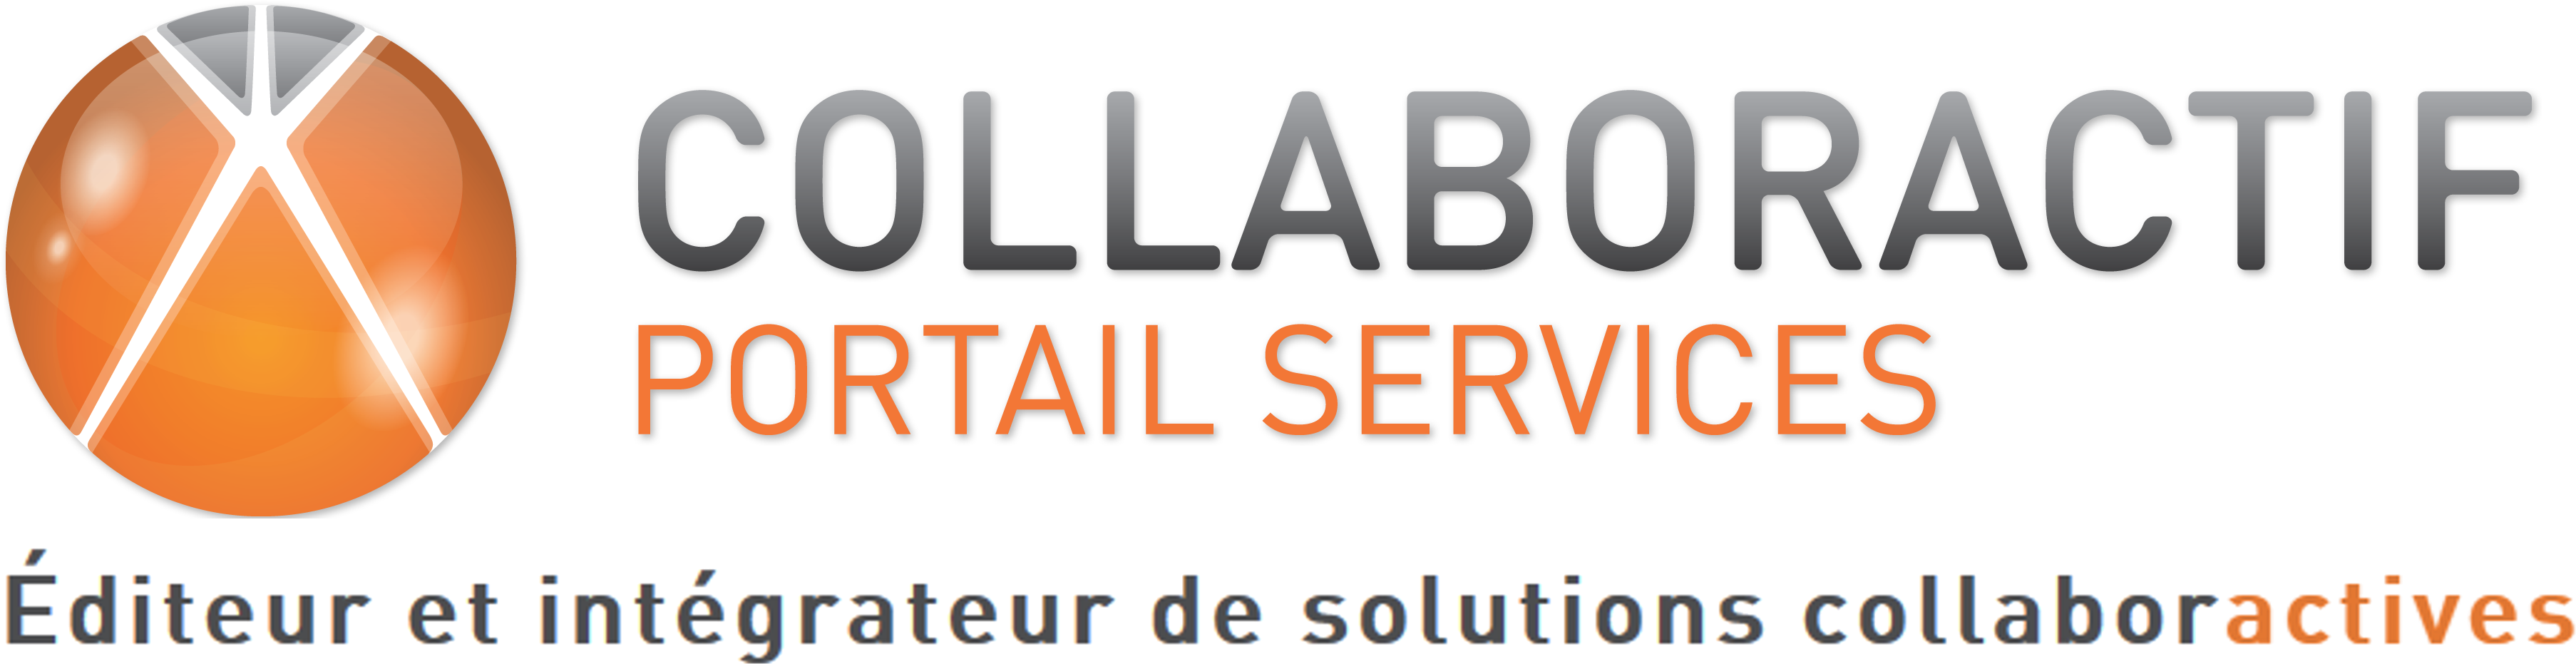 Collaboractif Portail Services